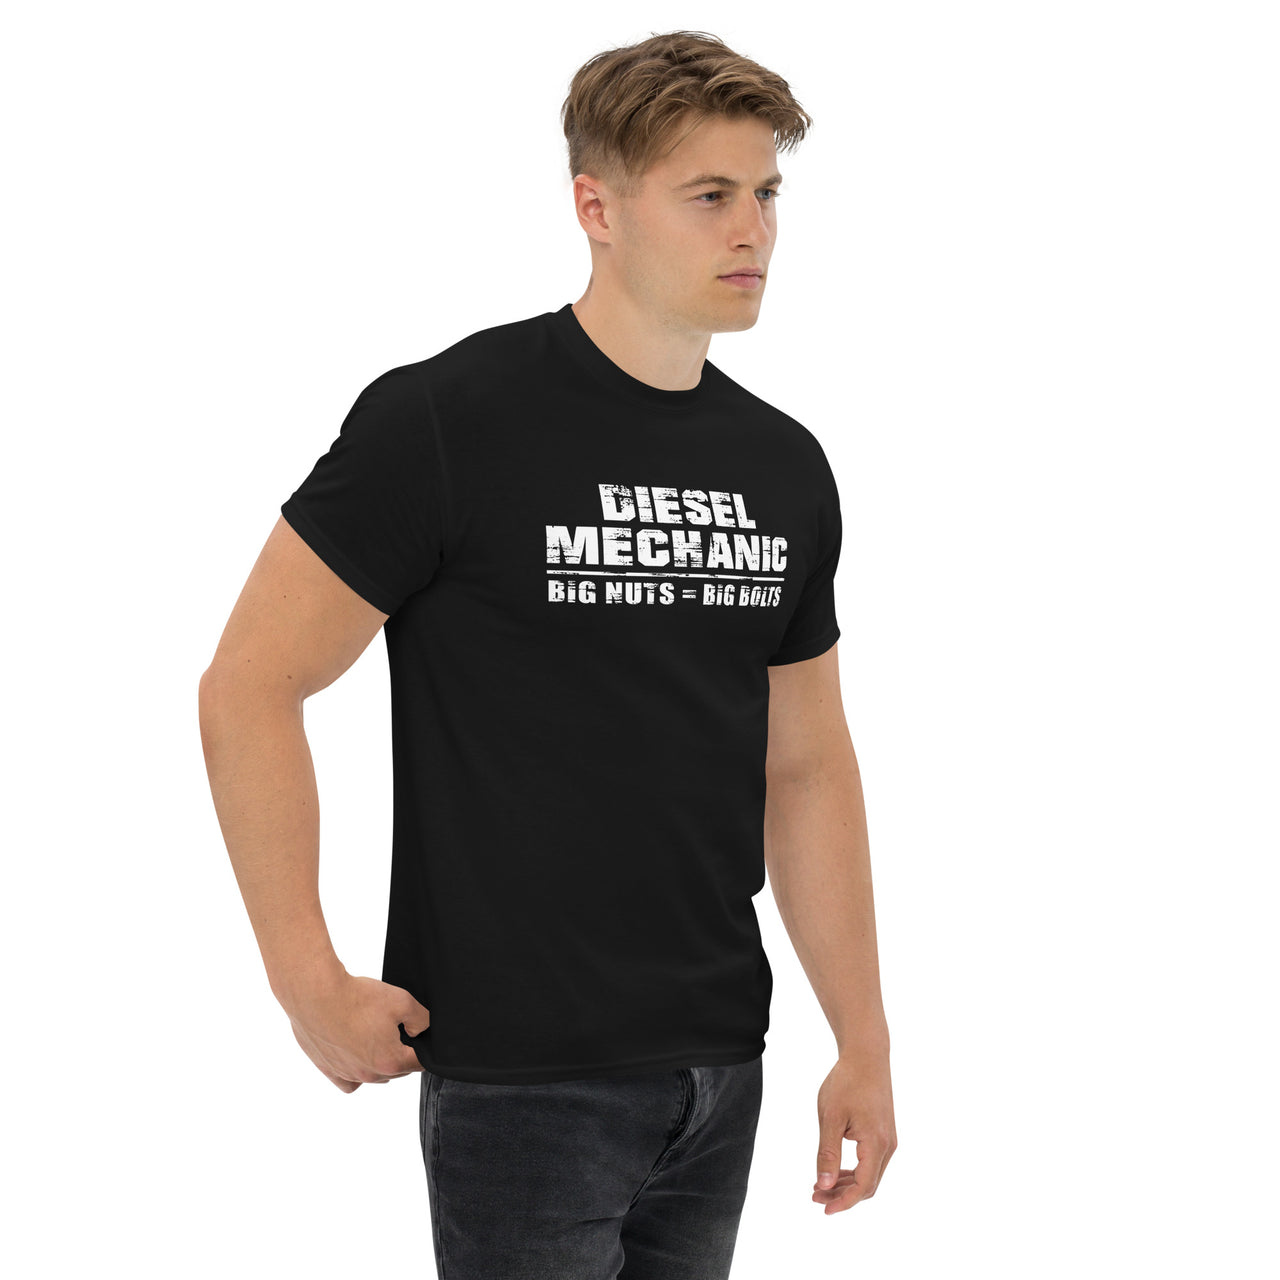 Funny Diesel Mechanic T-Shirt in black